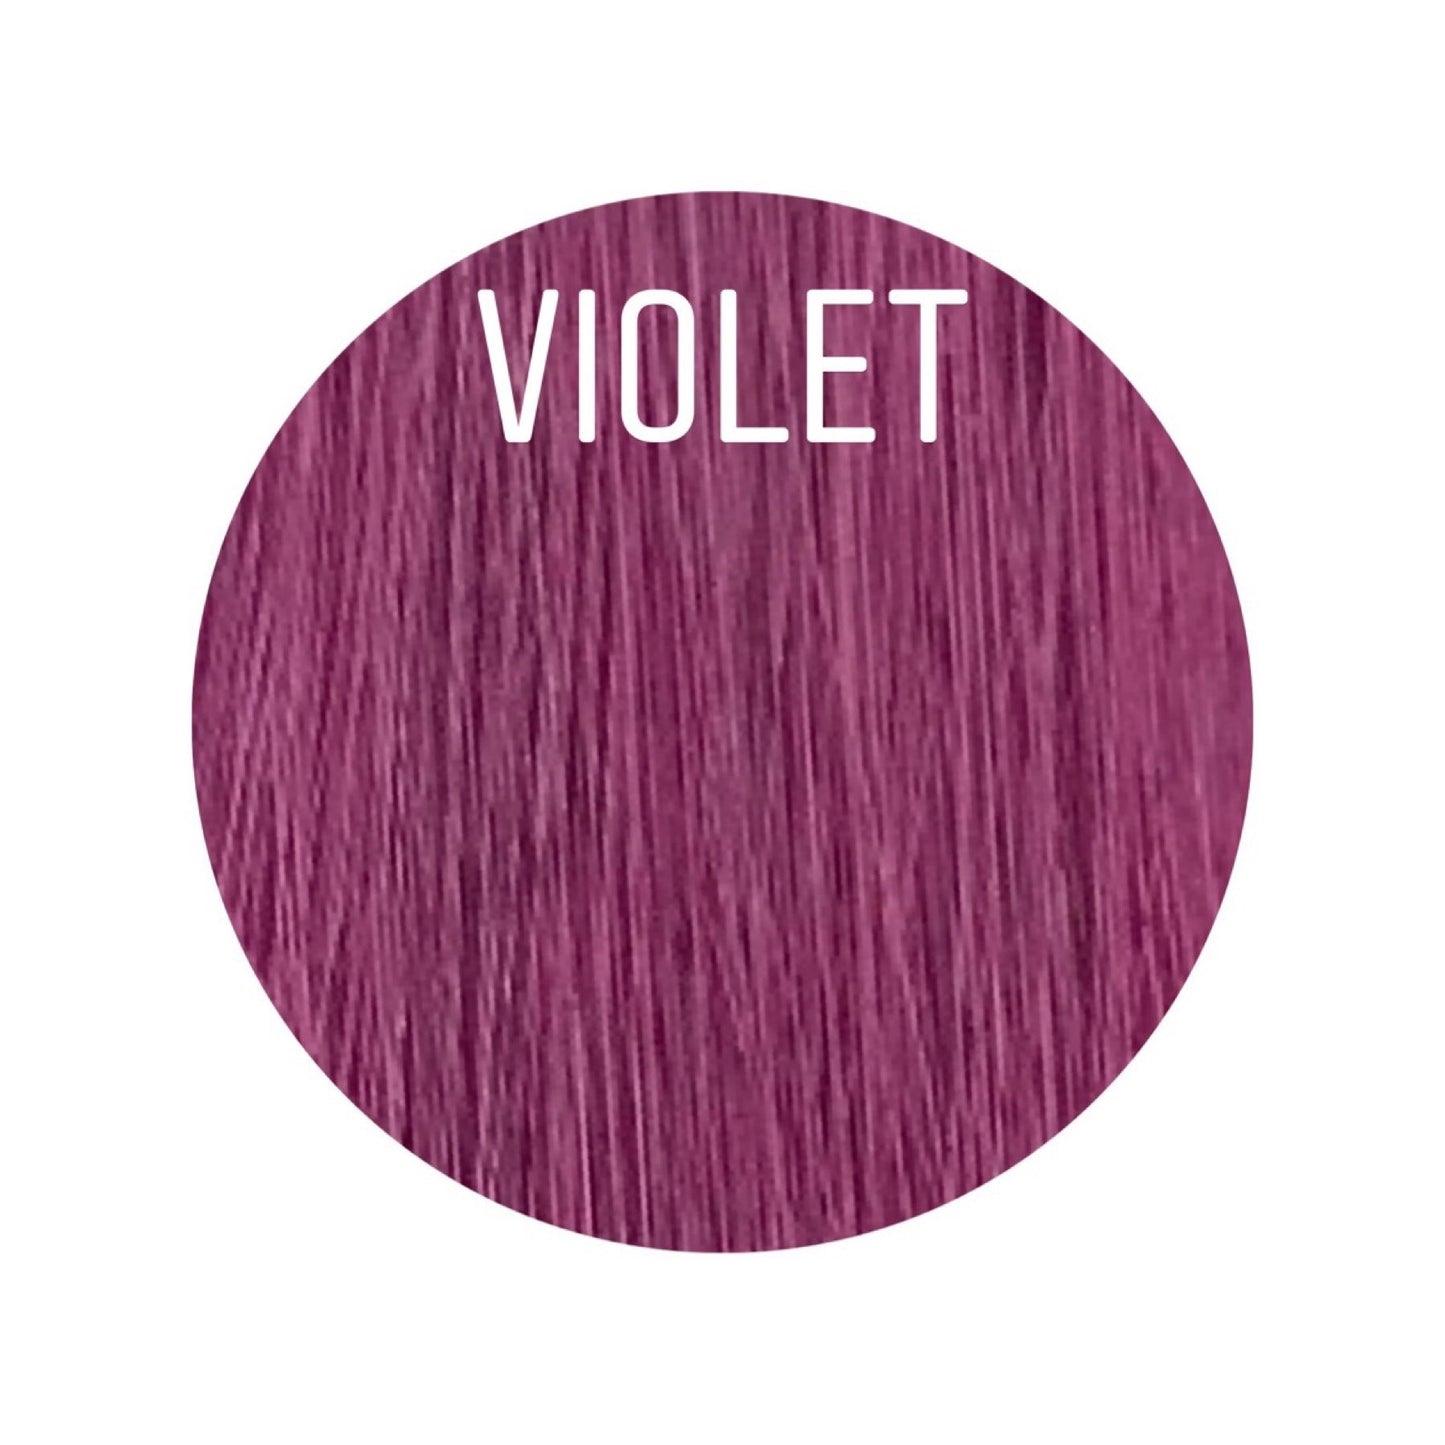 Hot Fusion Color Violet GVA hair_Retail price - GVA hair